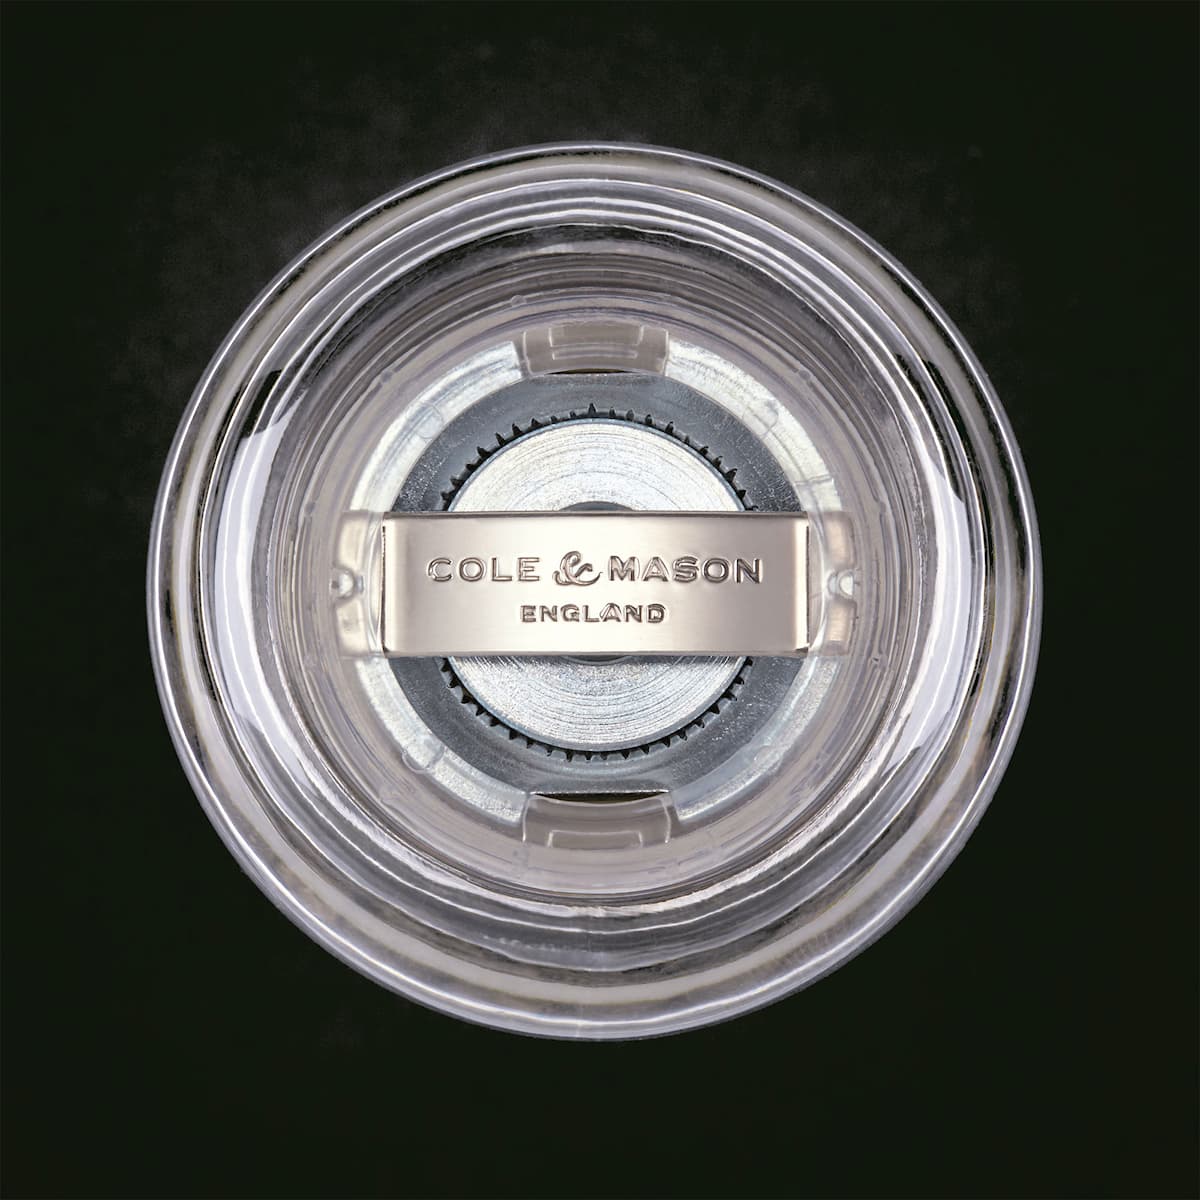 Cole & Mason Button Salt & Pepper Mill Set 6.5cm